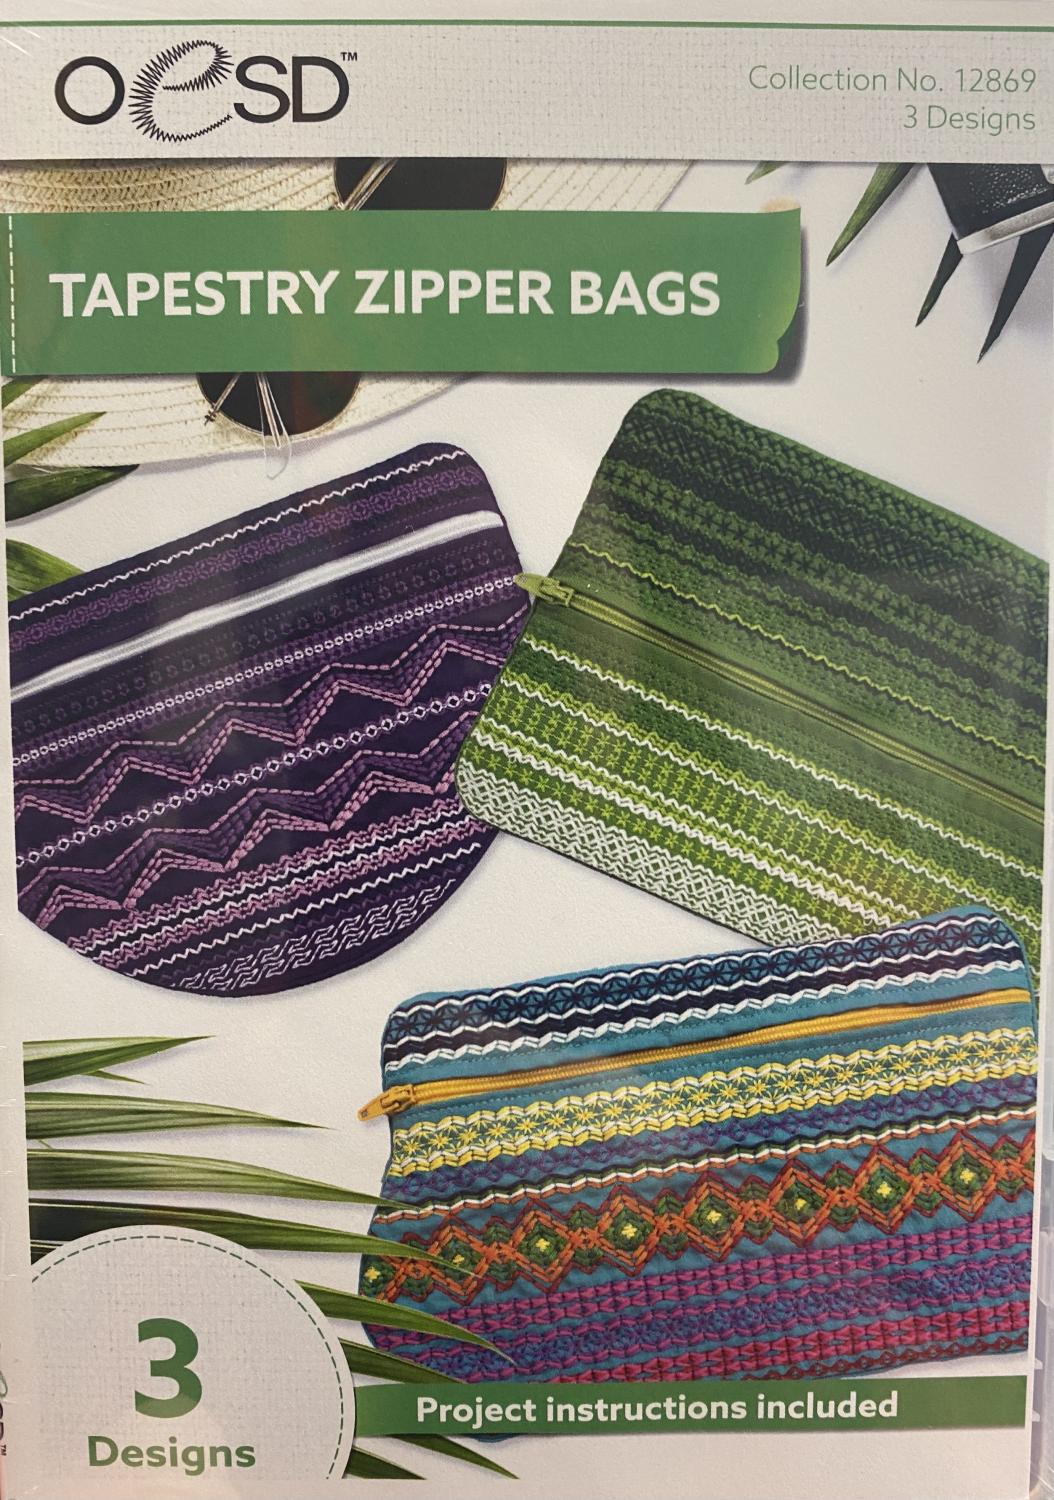 OESD Tapestry Zipper Bags